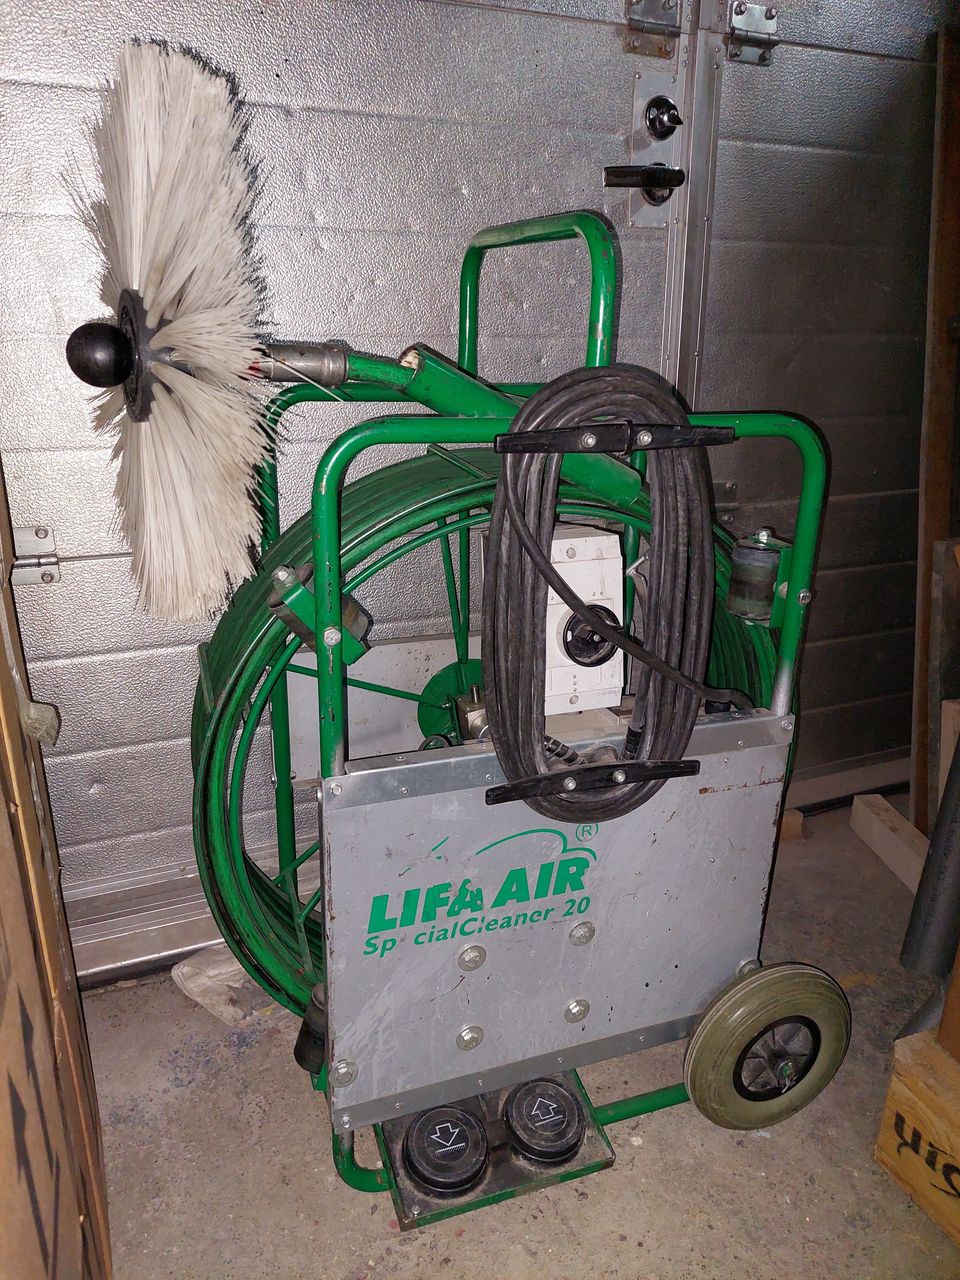 Lifa Air Special Cleaner 20 harjakone IV-kanavien puhdistukseen